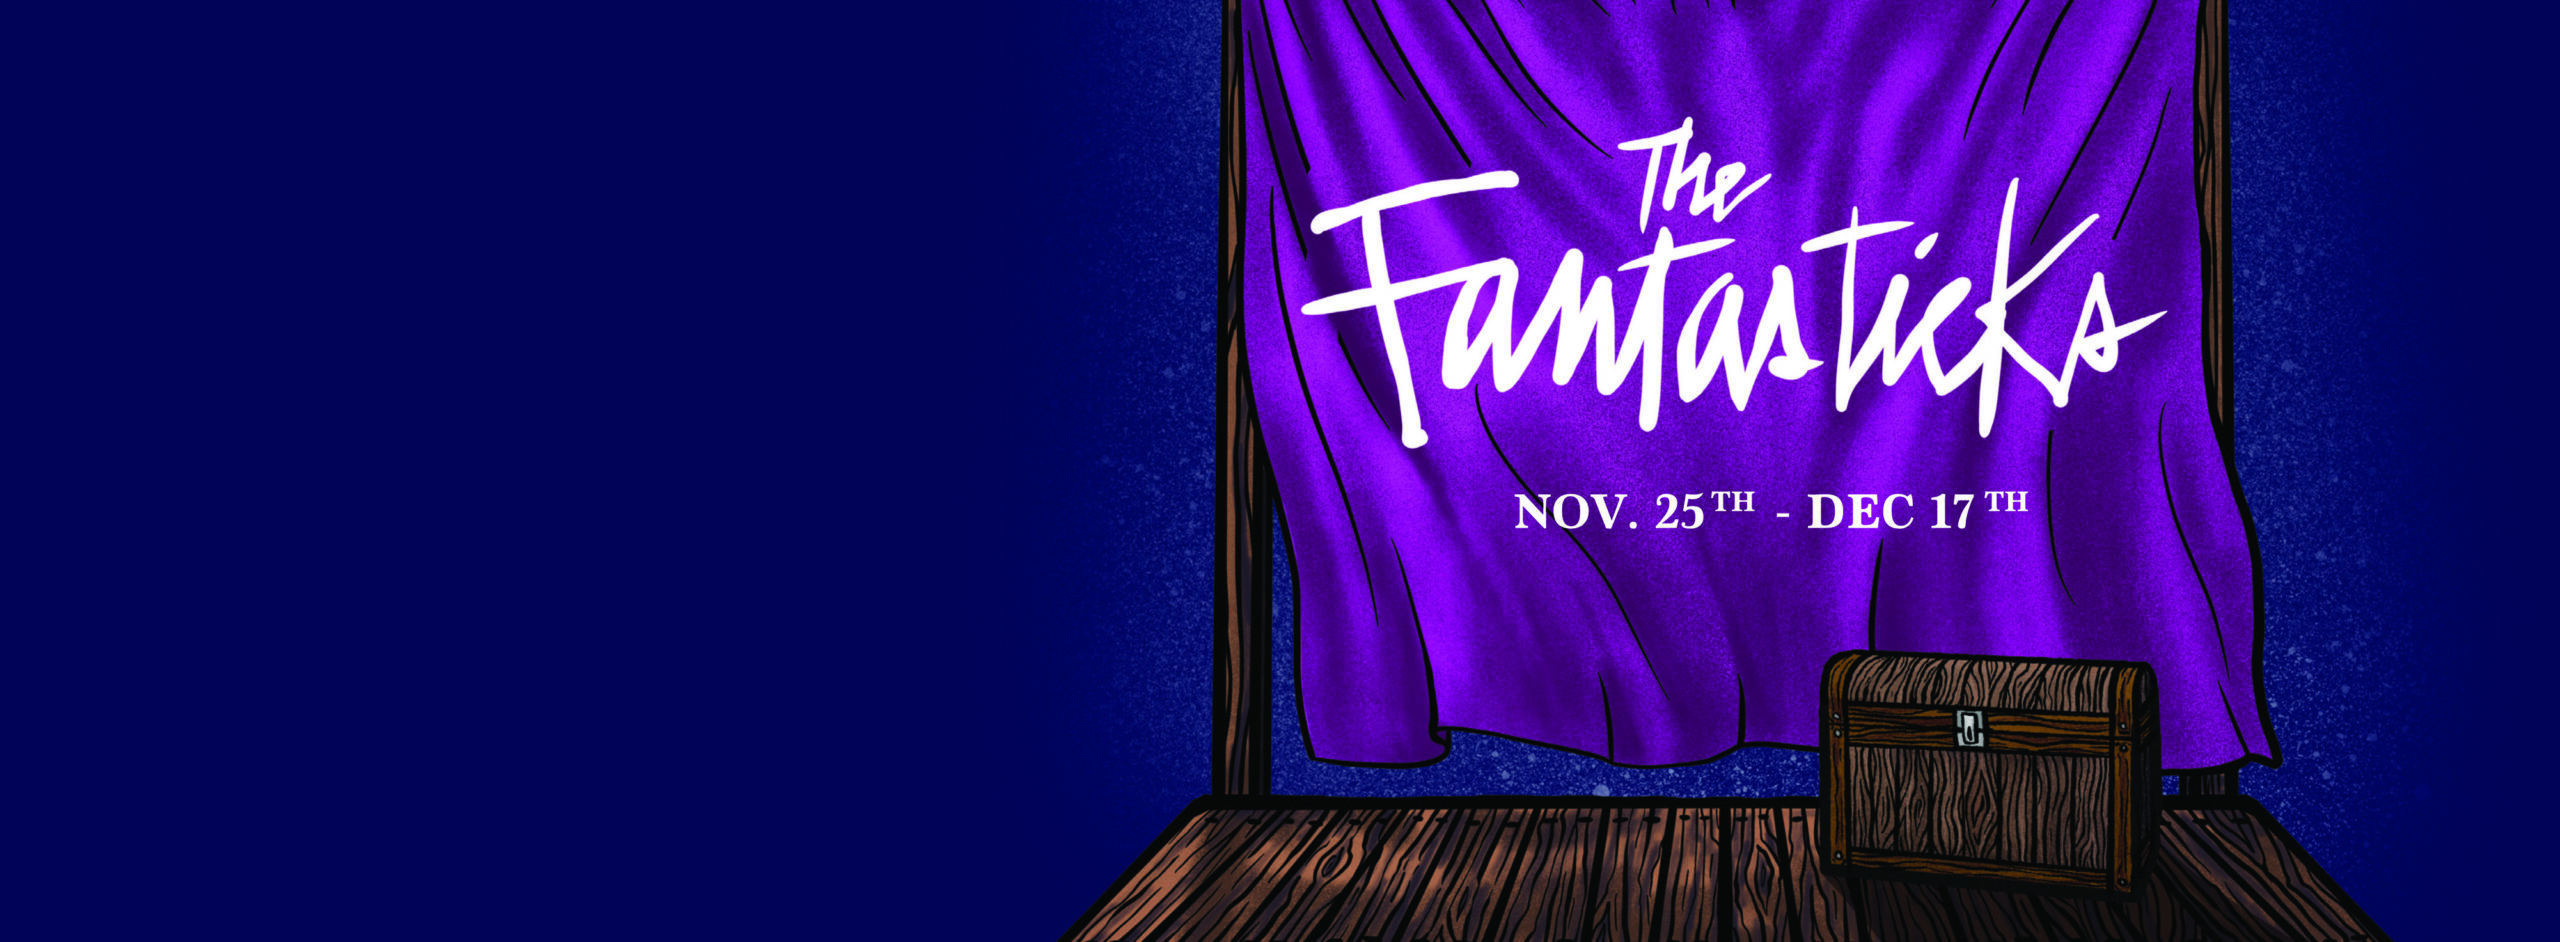 The Fantasticks opens Nov. 25 at Pentacle Theatre